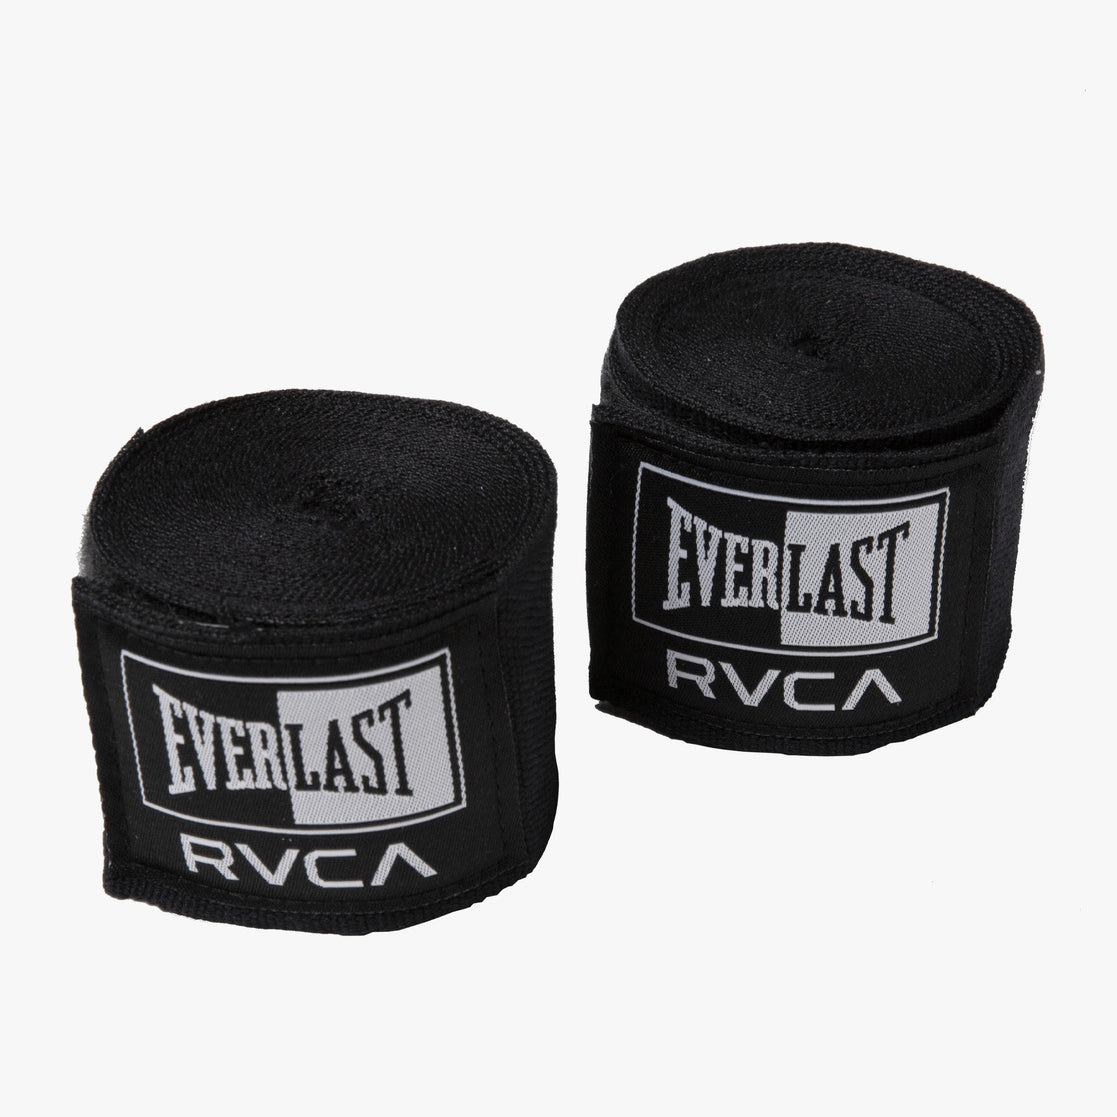 180" Everlast x RVCA Handwraps - Everlast